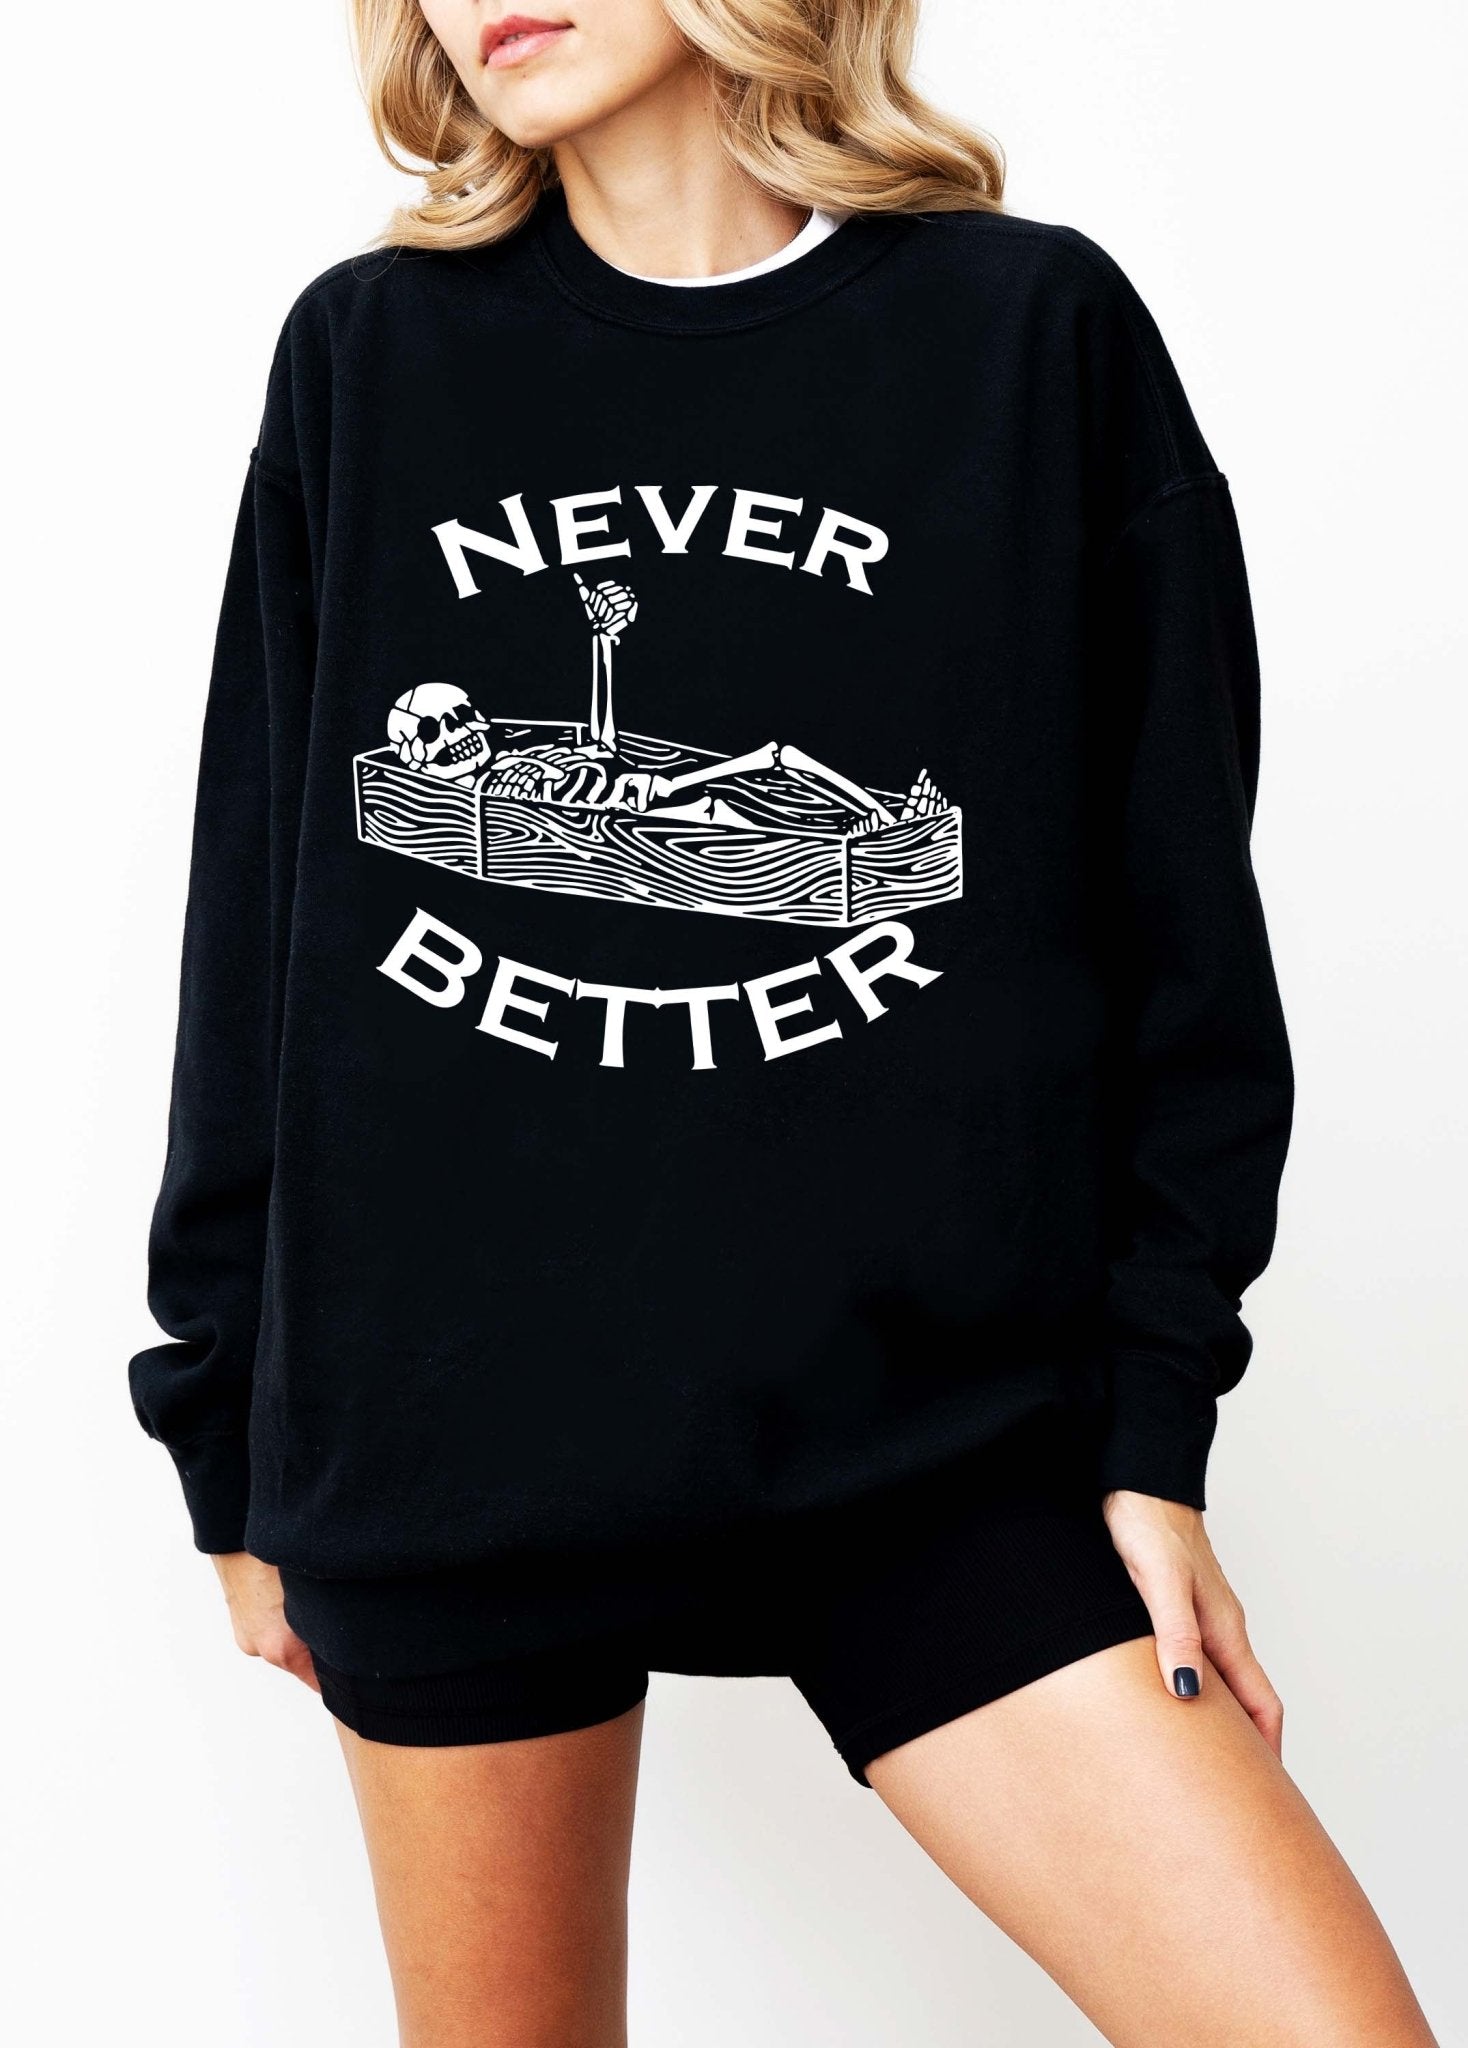 Never Better Crew Sweatshirt - UntamedEgo LLC.